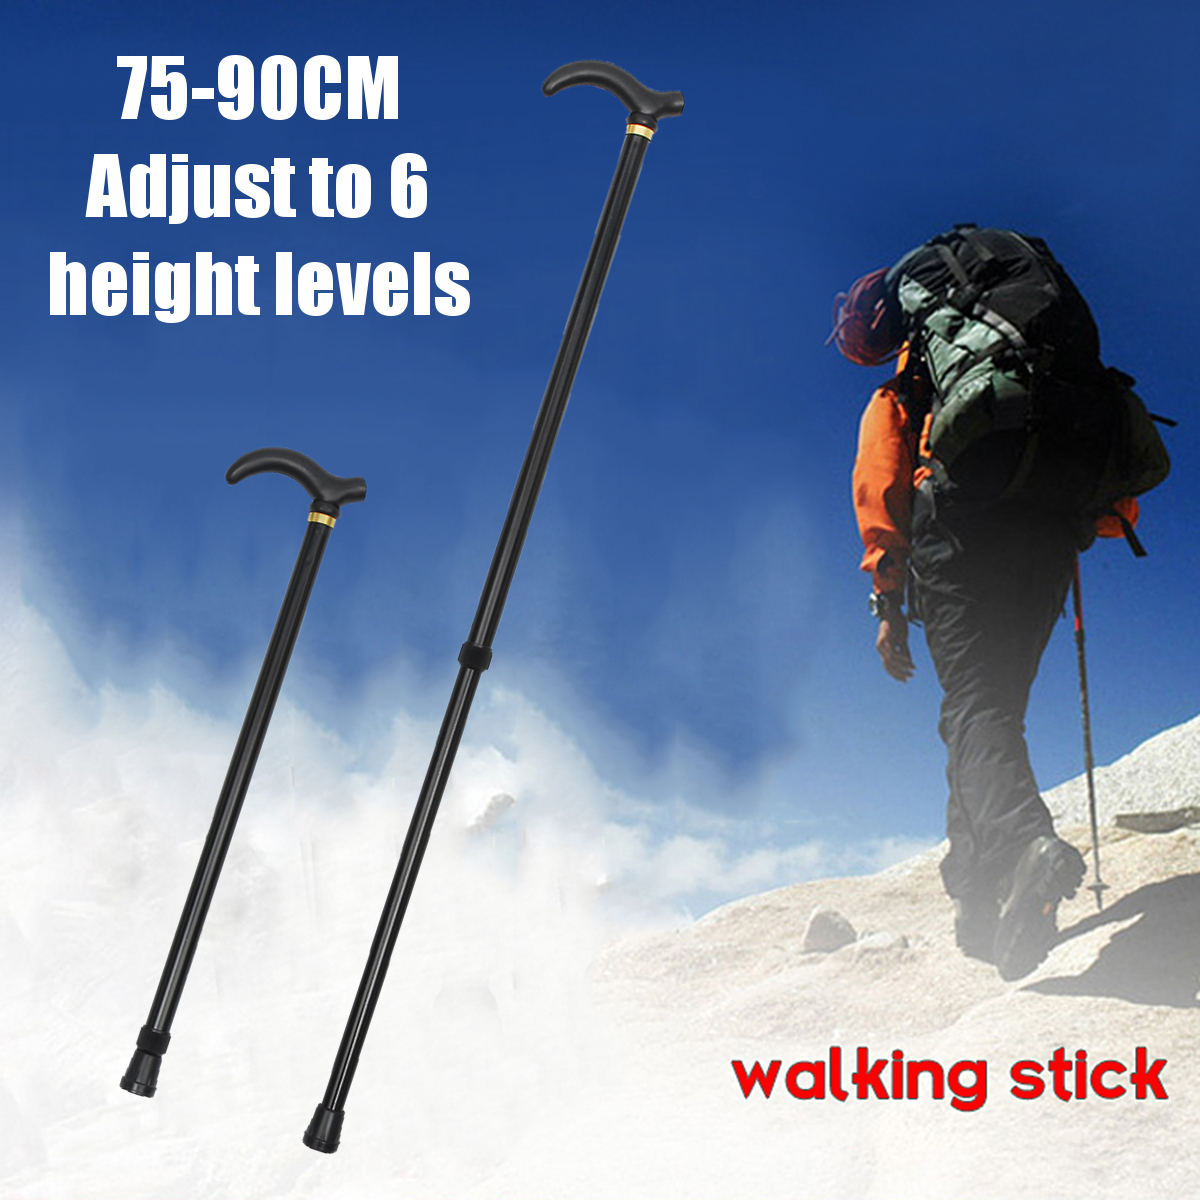 75-90CM-Metal-Walking-Hiking-Stick-Travel-Folding-Cane-Pole-Compact-Adjustable-Alpenstock-1247193-1